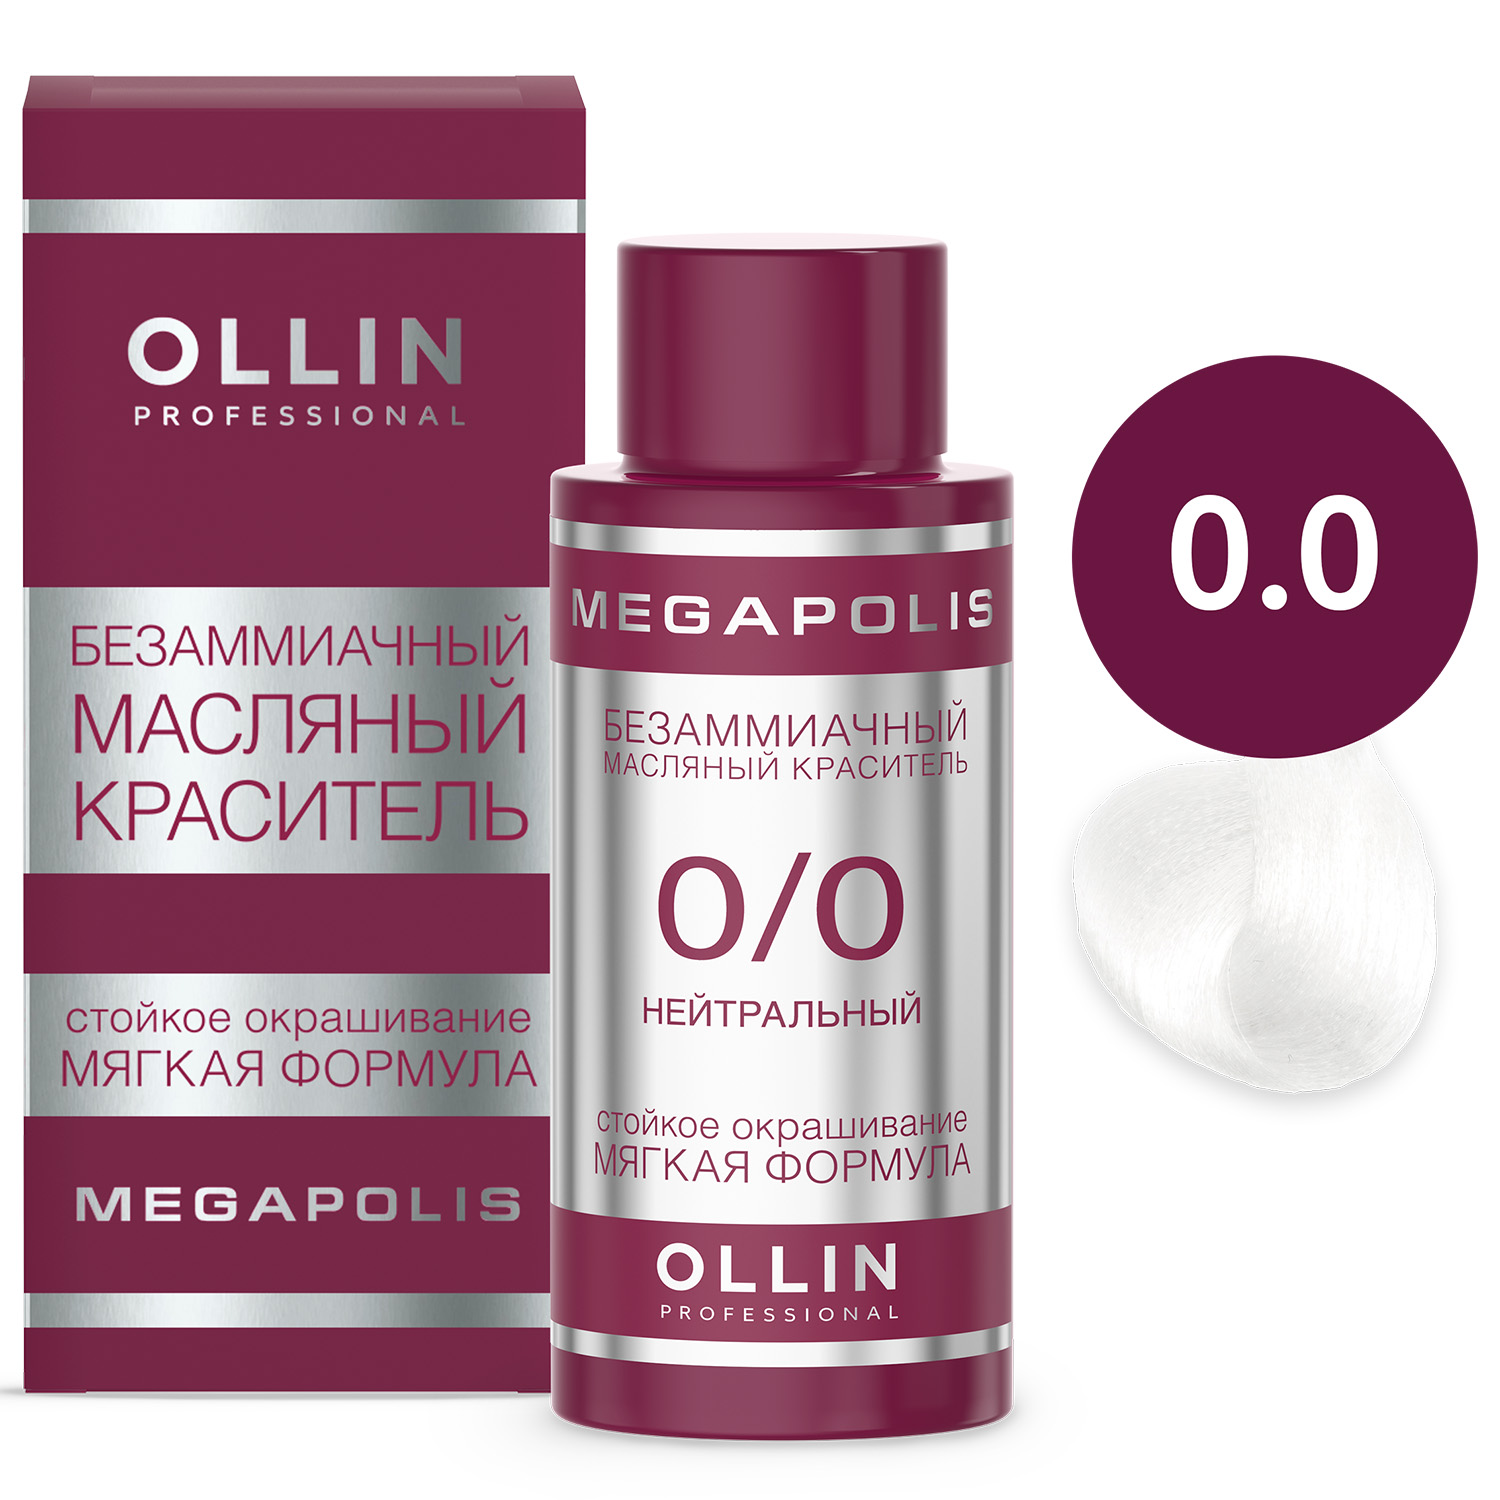 Ollin Professional Безаммиачный масляный краситель для волос, 50 мл (Ollin Professional, Megapolis)